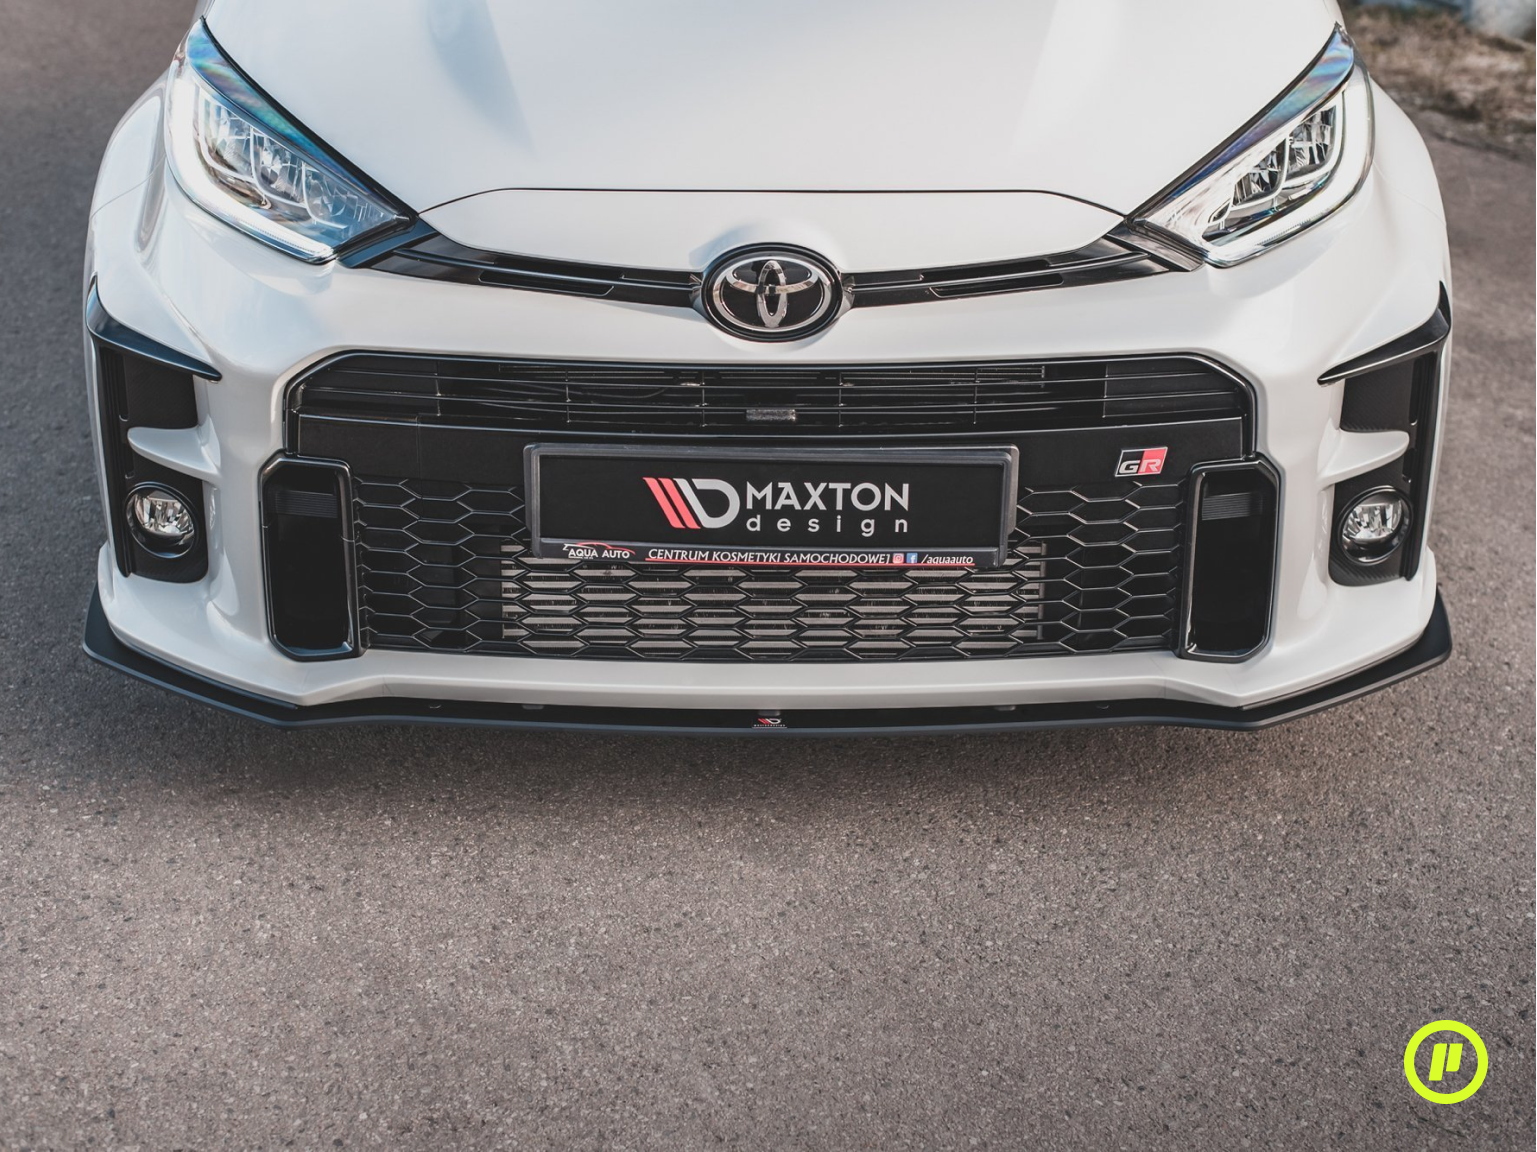 Racing Durability Frontsplitter für Toyota GR Yaris (MK4 2020+)